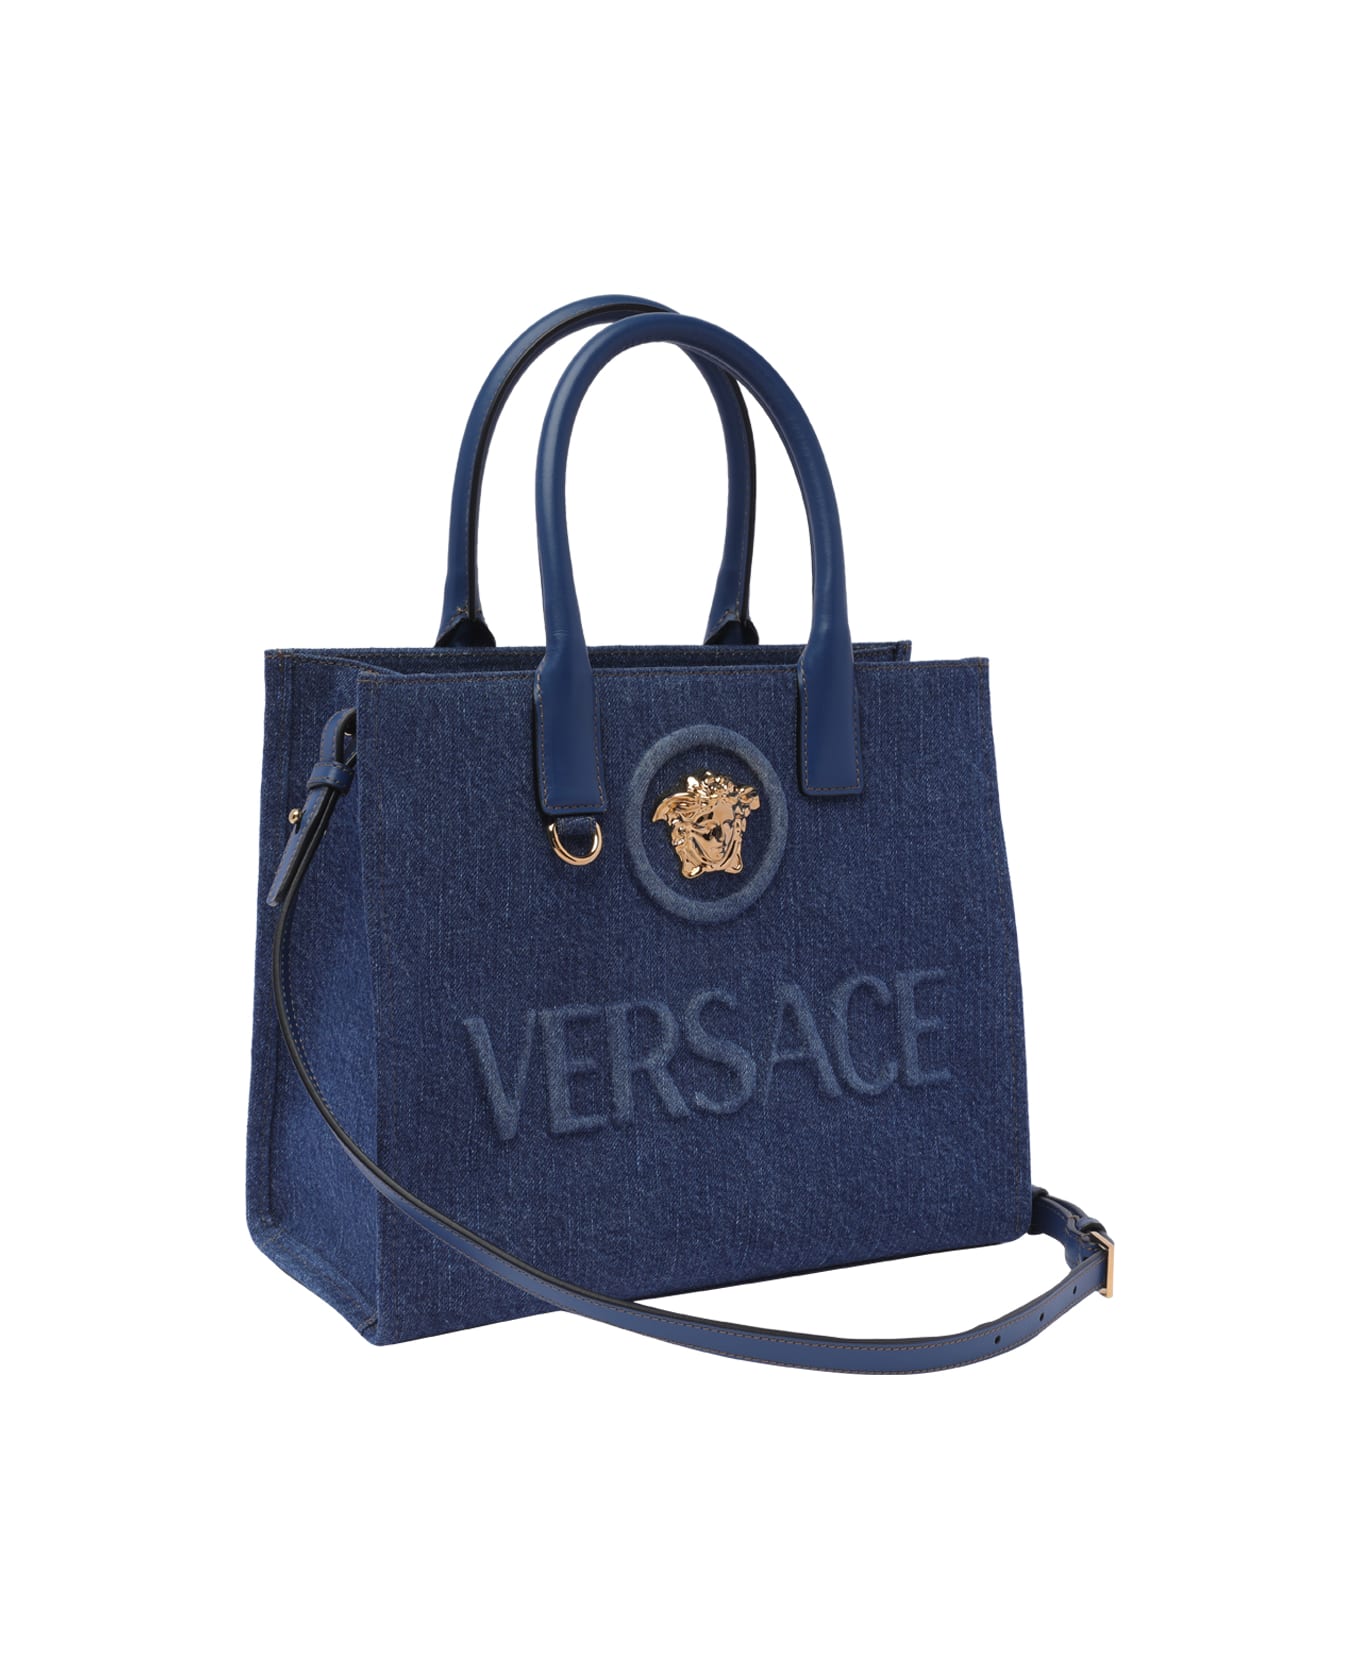 Versace Small La Medusa Shopper - Blue